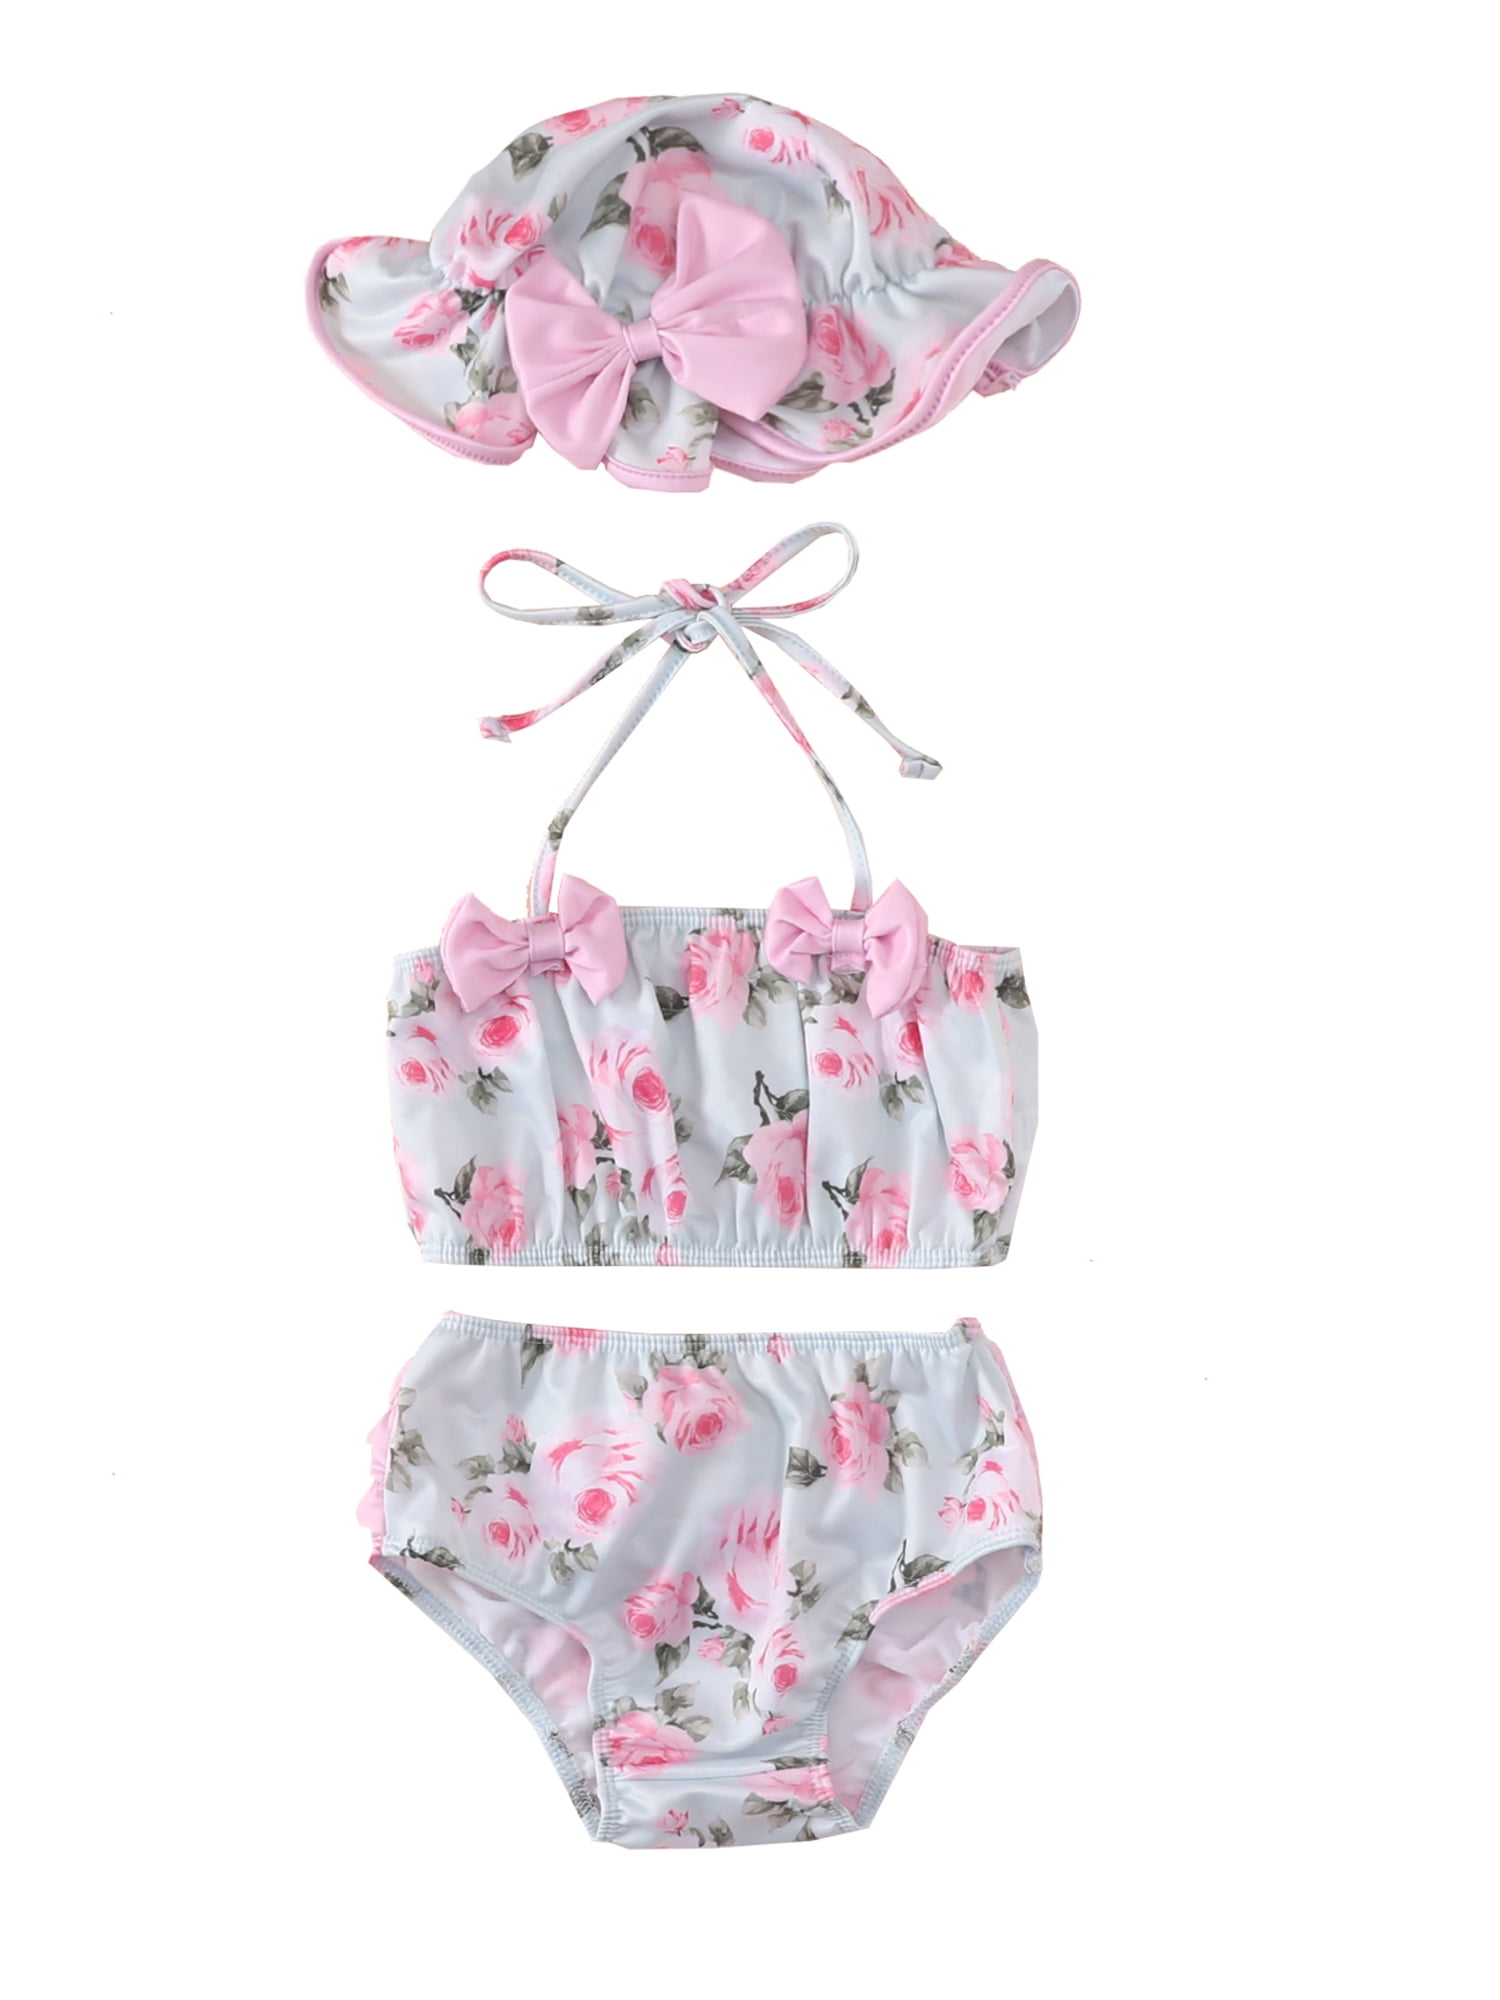 Newborn Baby Girl Swimsuit Sleeveless Flamingo Print Crop Top Ruffle Shorts Hat 3Pcs Summer Bathing Suit 